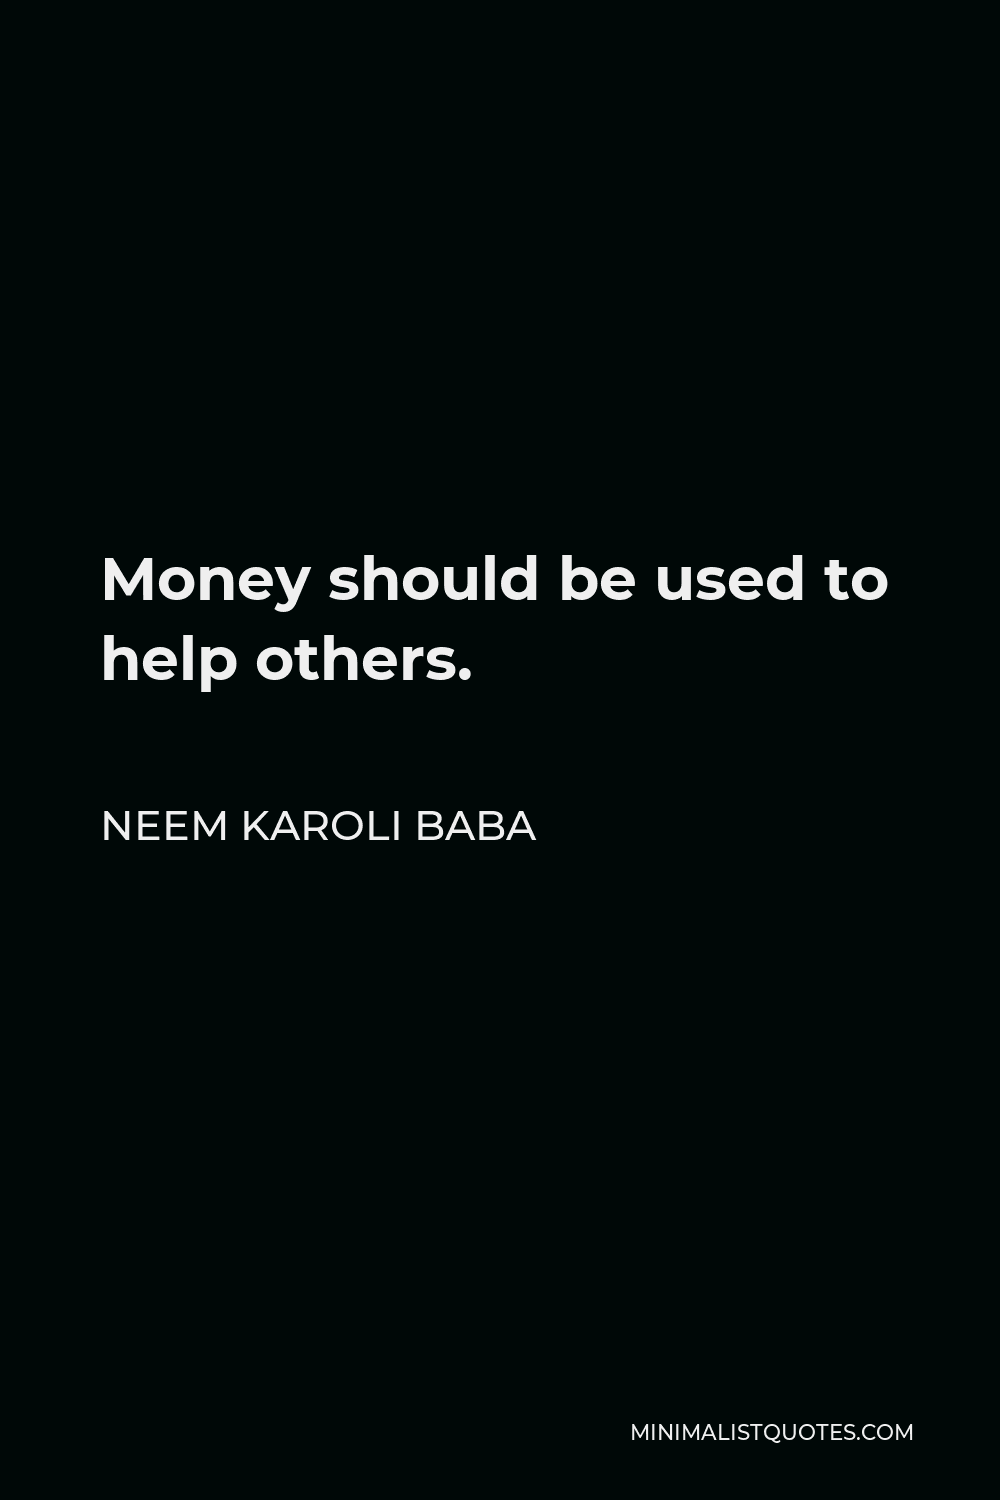 Neem Karoli Baba Quote - Money should be used to help others.